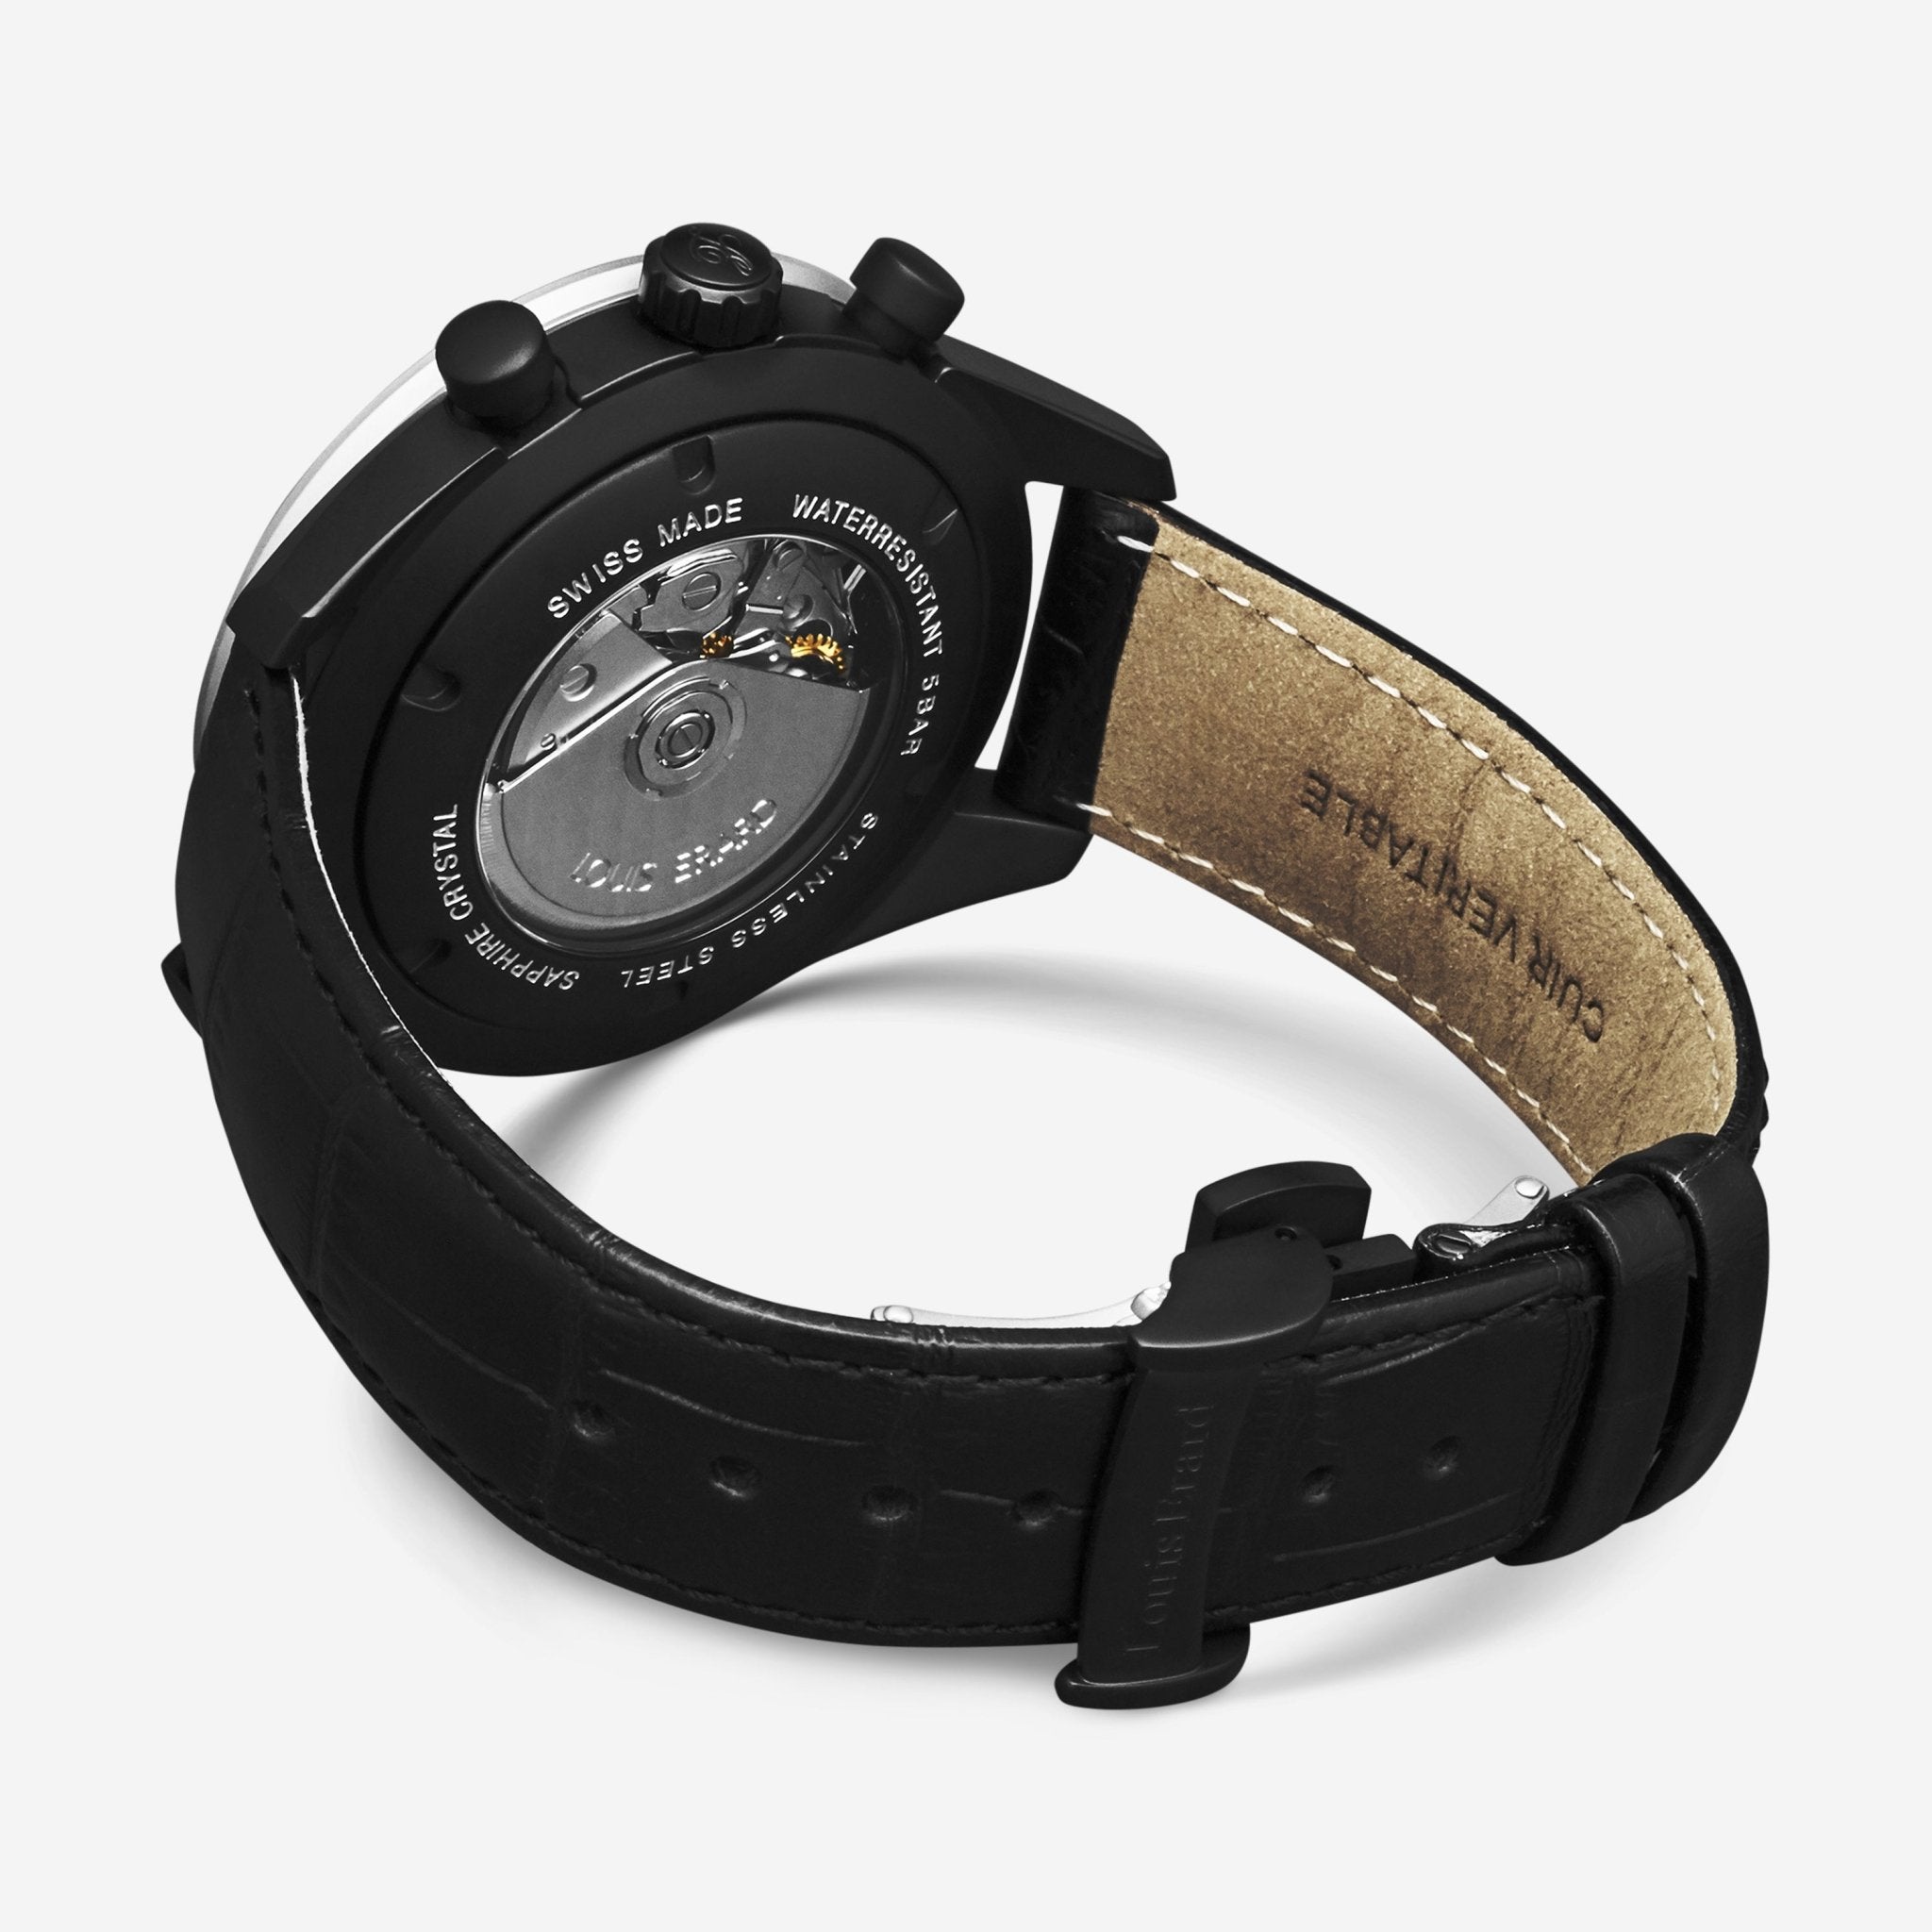 Louis Erard Sportive Chronograph Black PVD Automatic Men's Watch 78109NA22.BDCN82 - THE SOLIST - Louis Erard